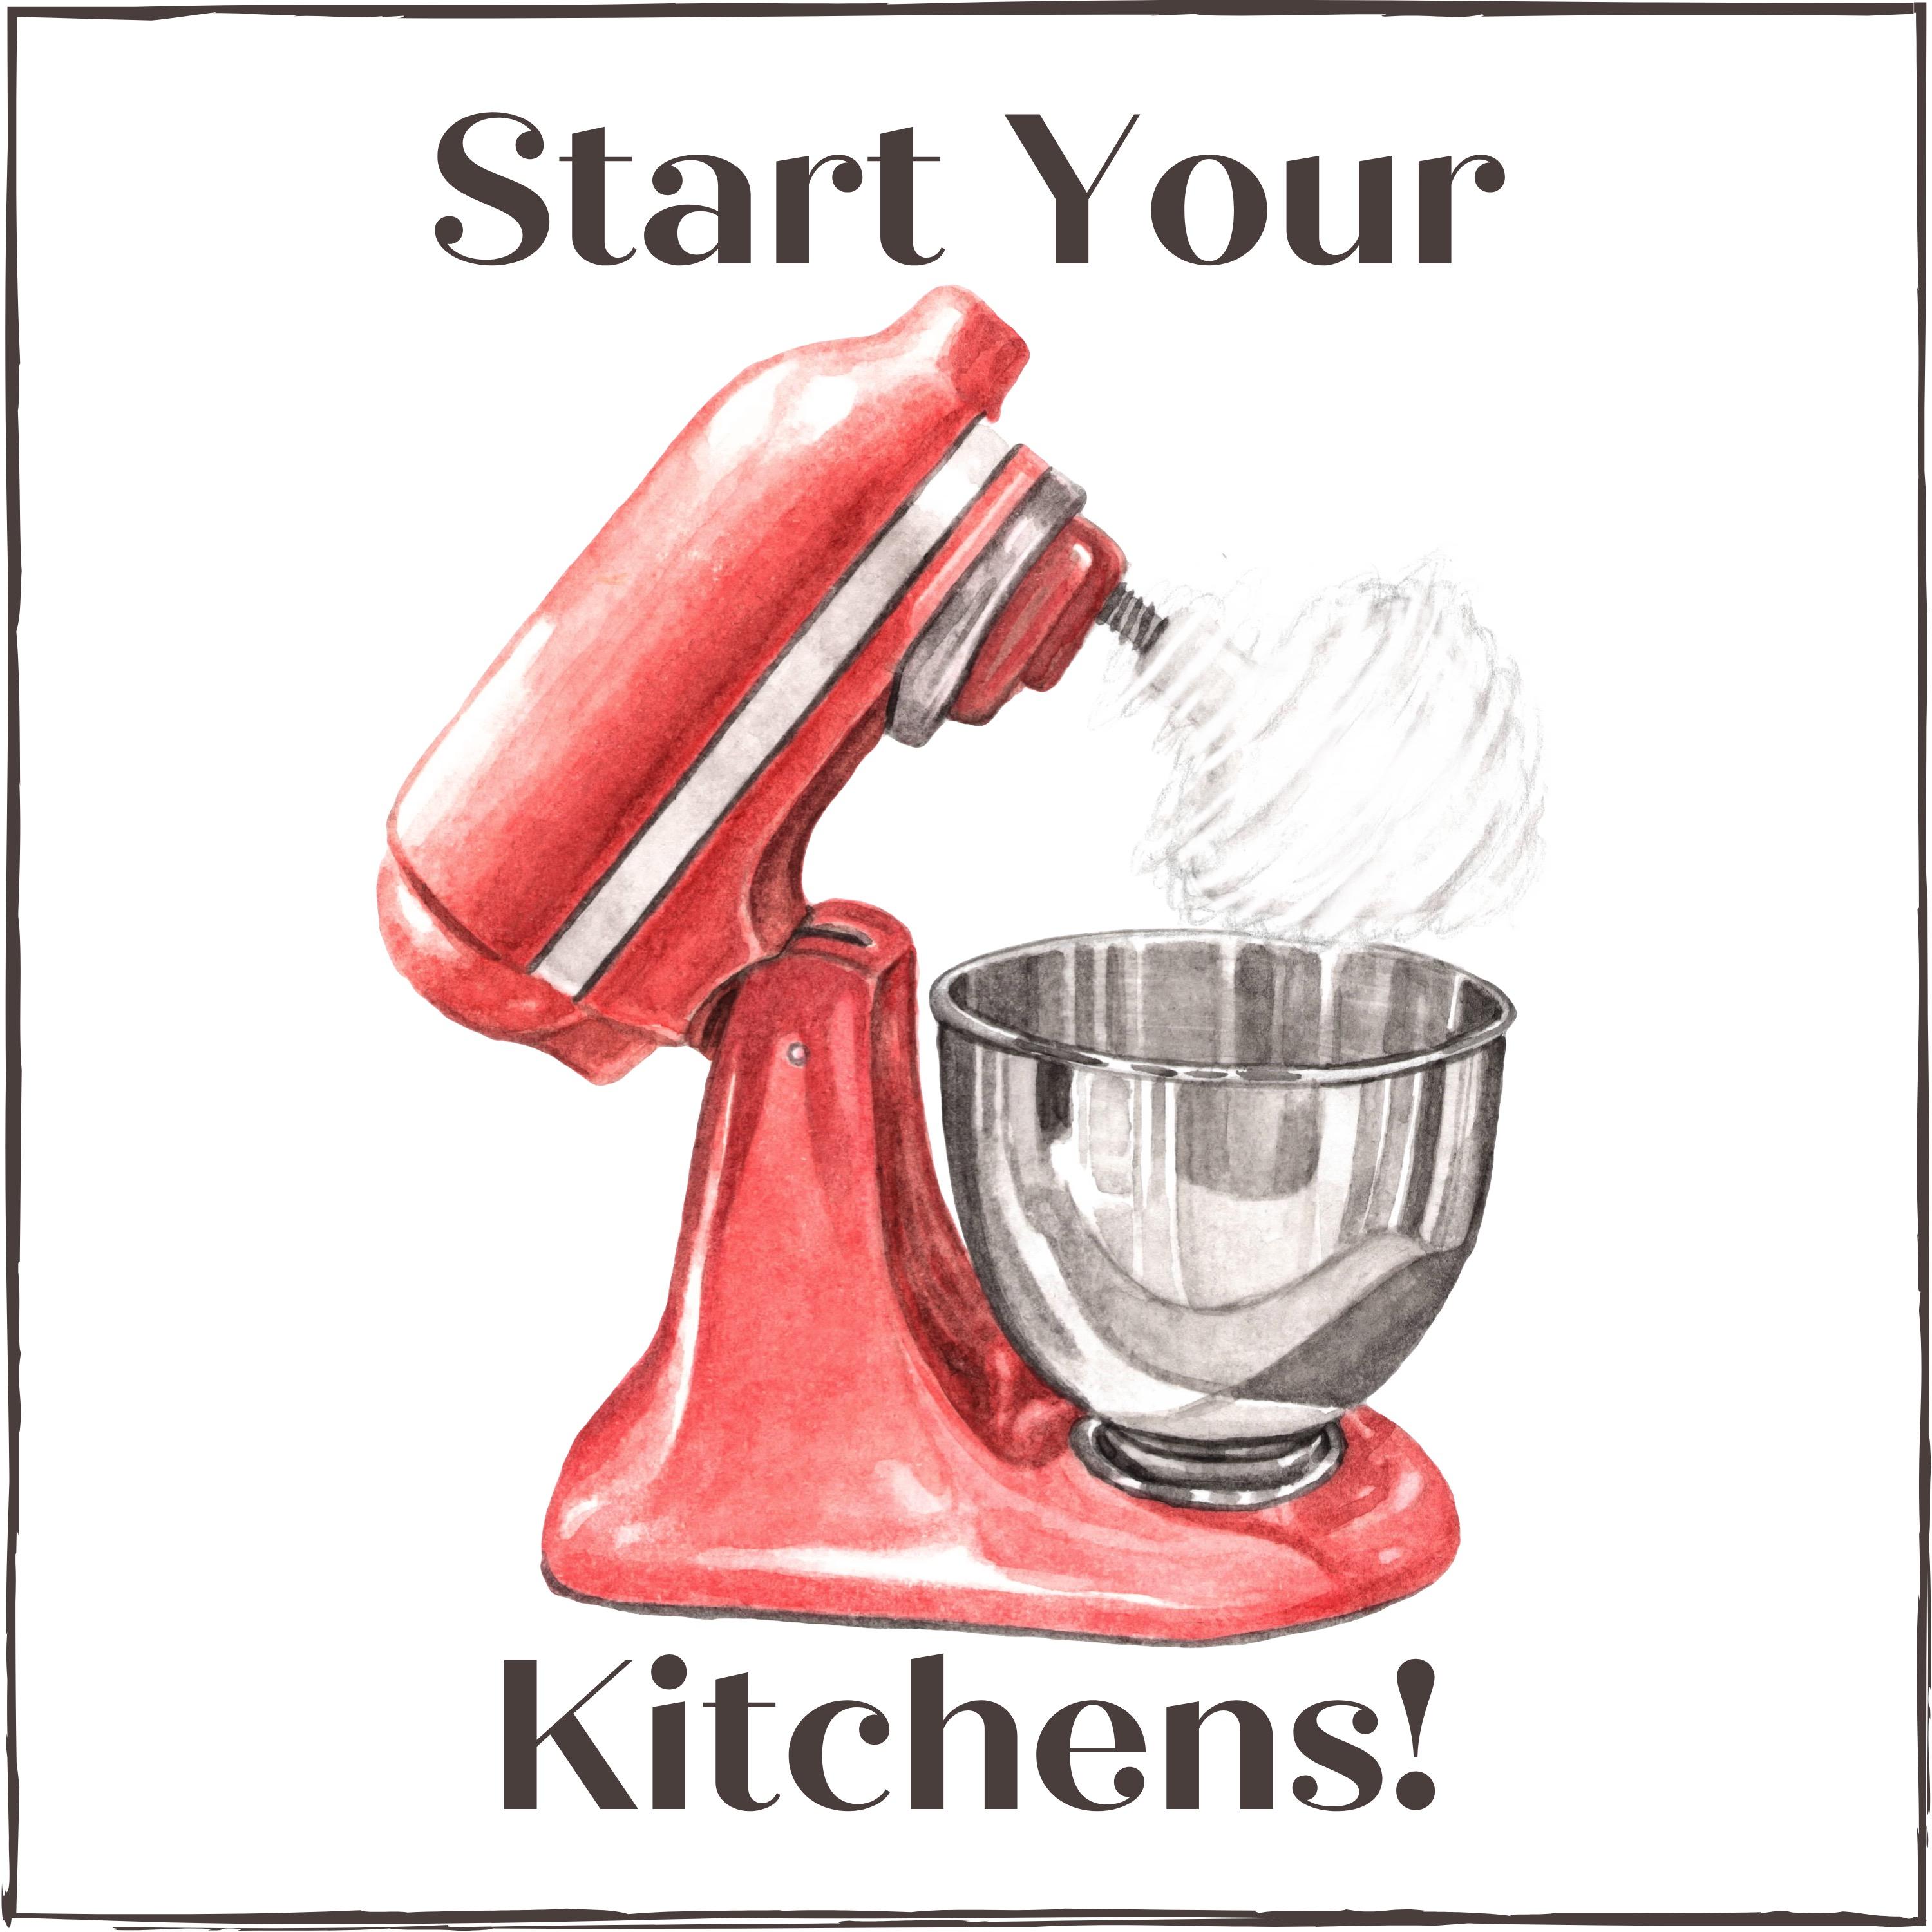 Start Your Kitchens!